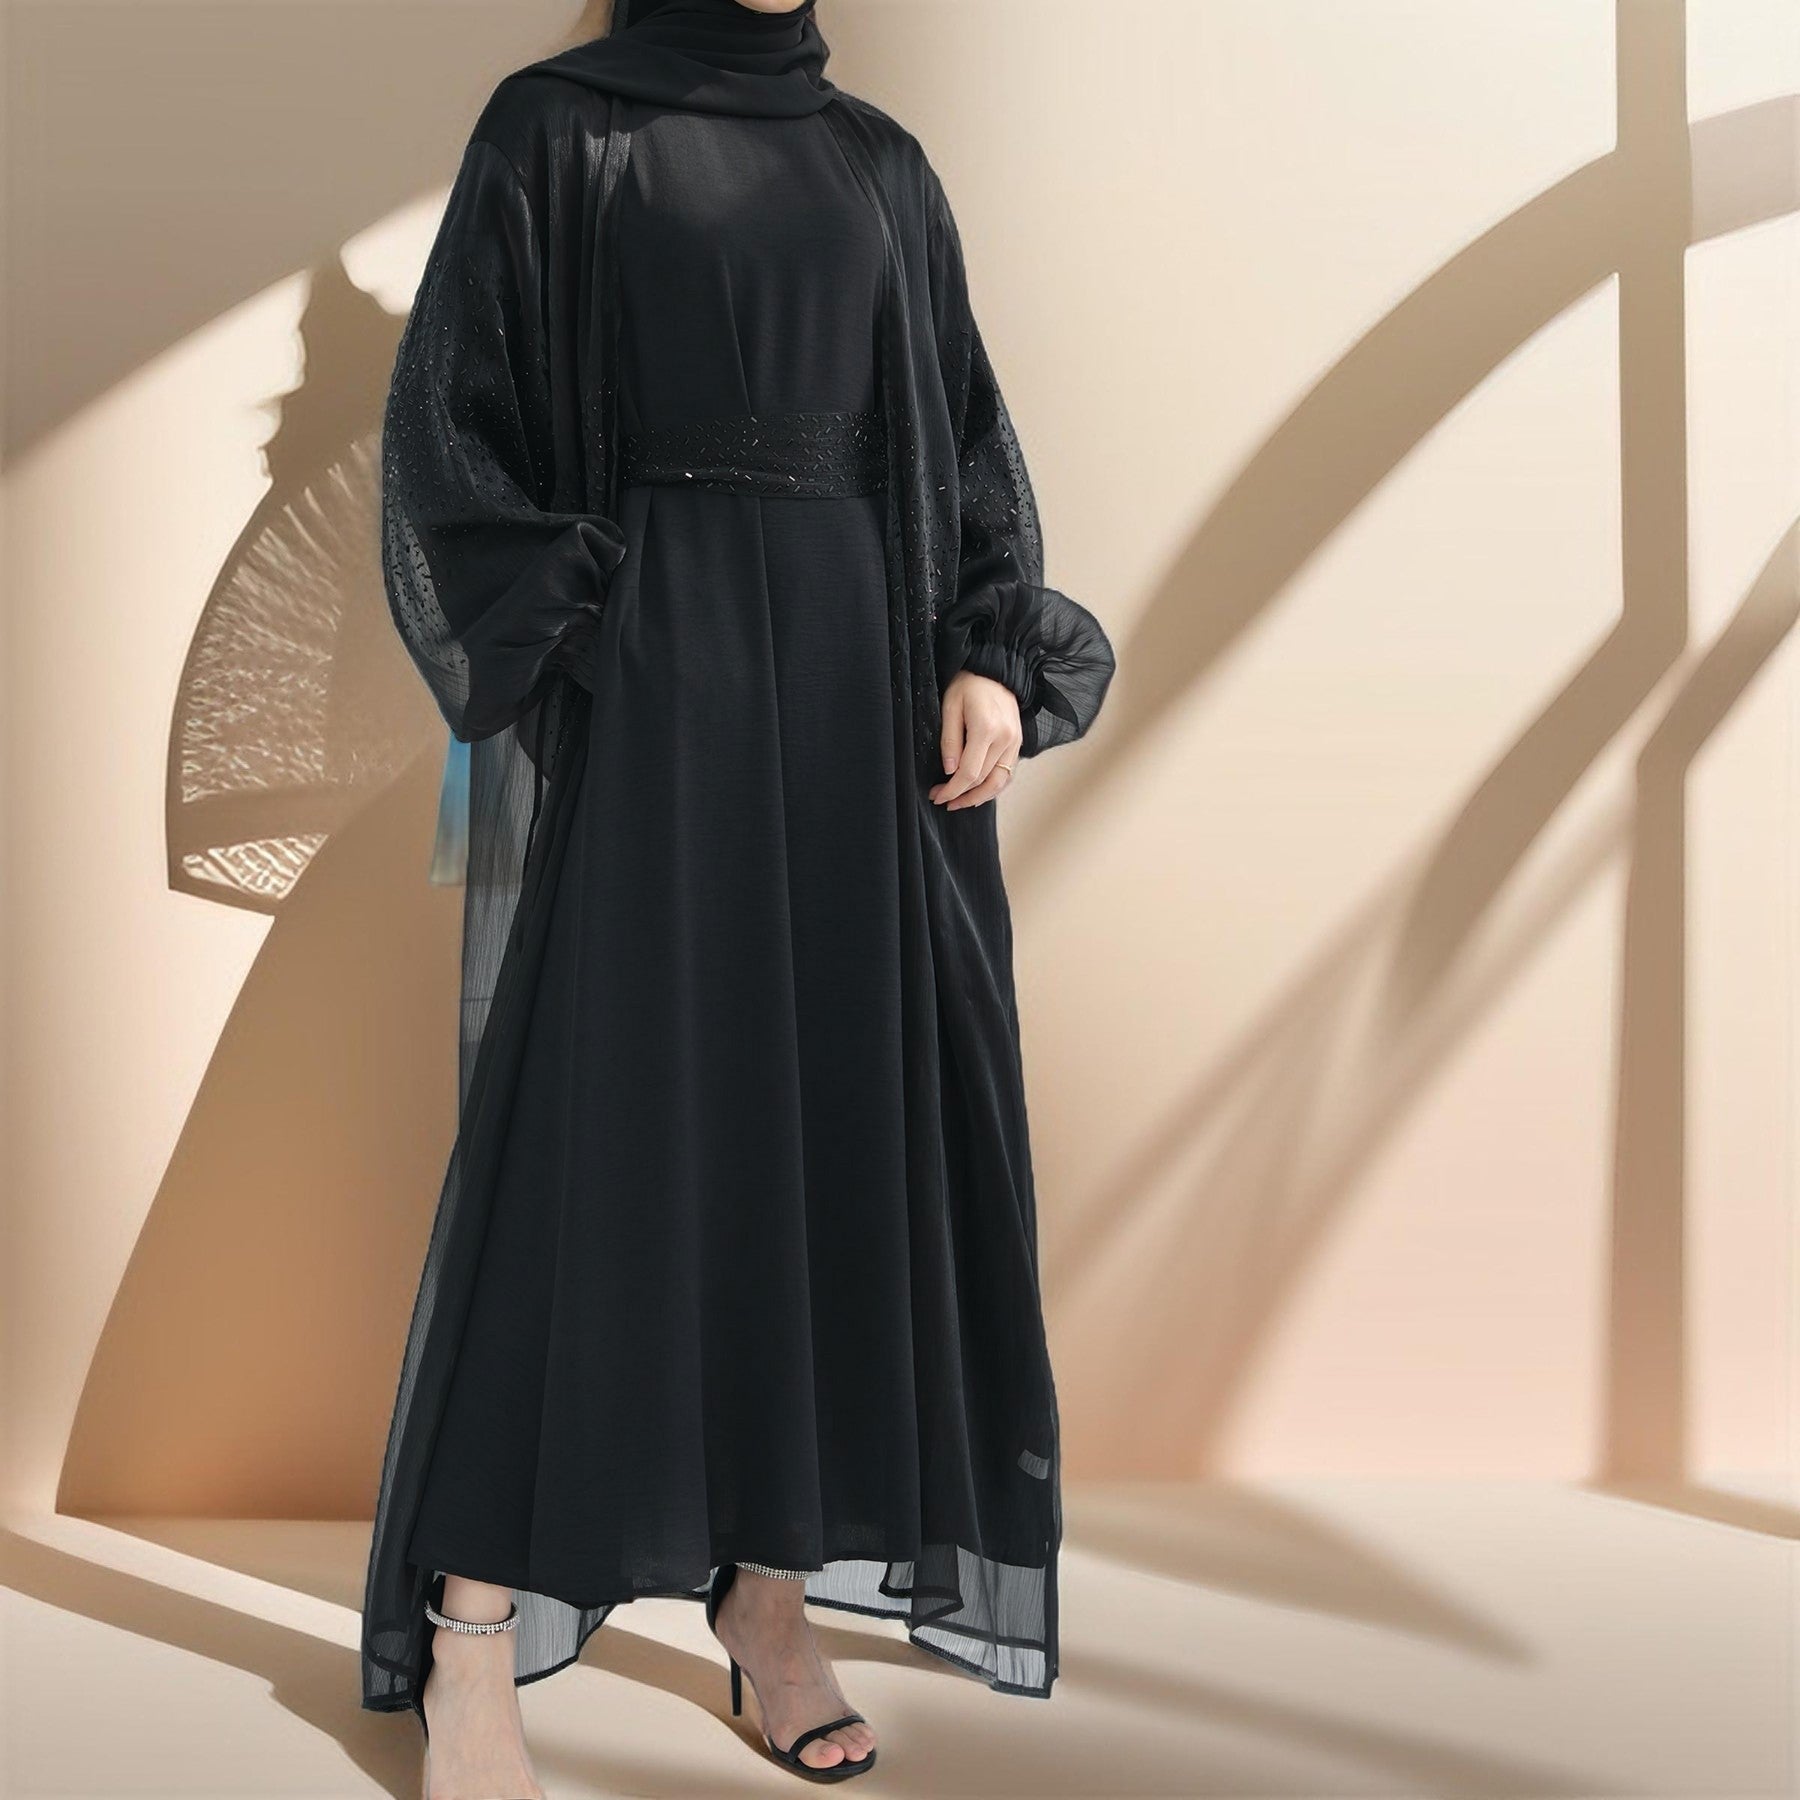 Stunning 2-Piece Abaya Set with Embellished Stones - Try Modest Limited 